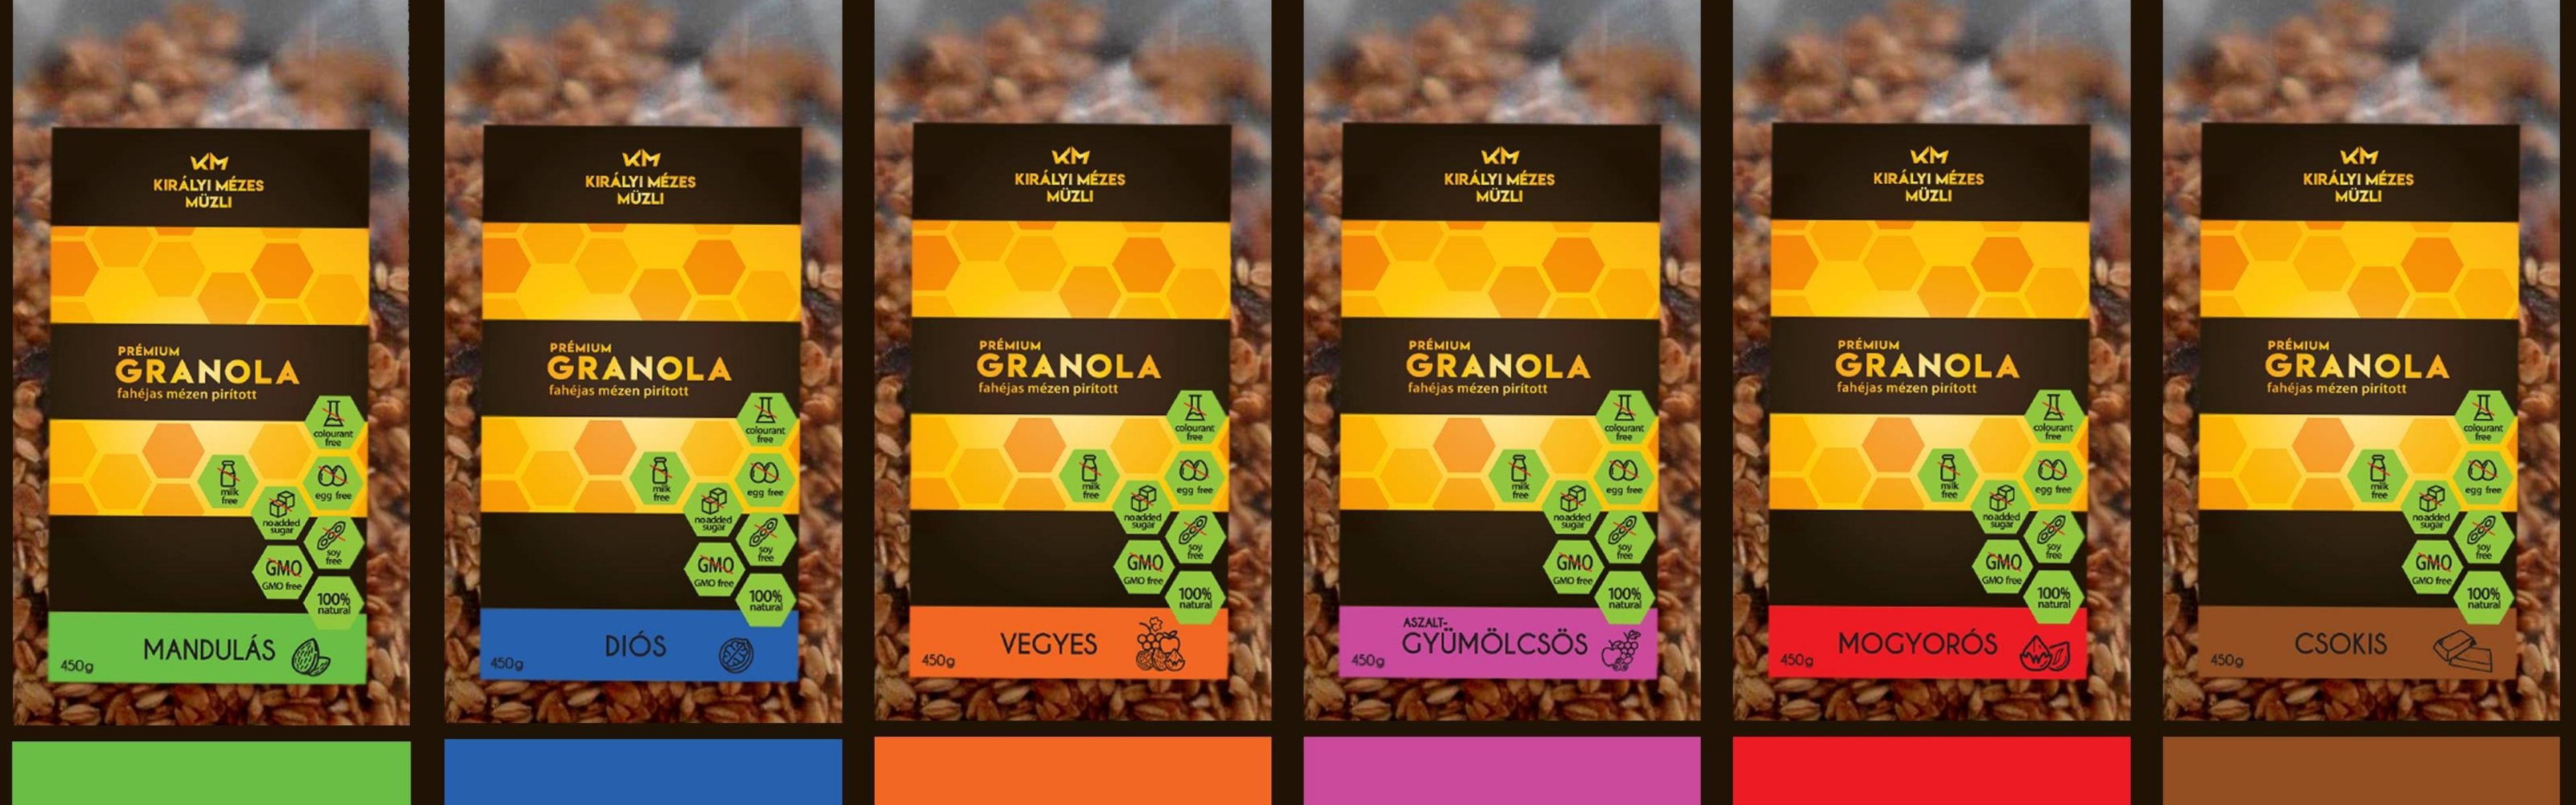 Granola Müzli termékek